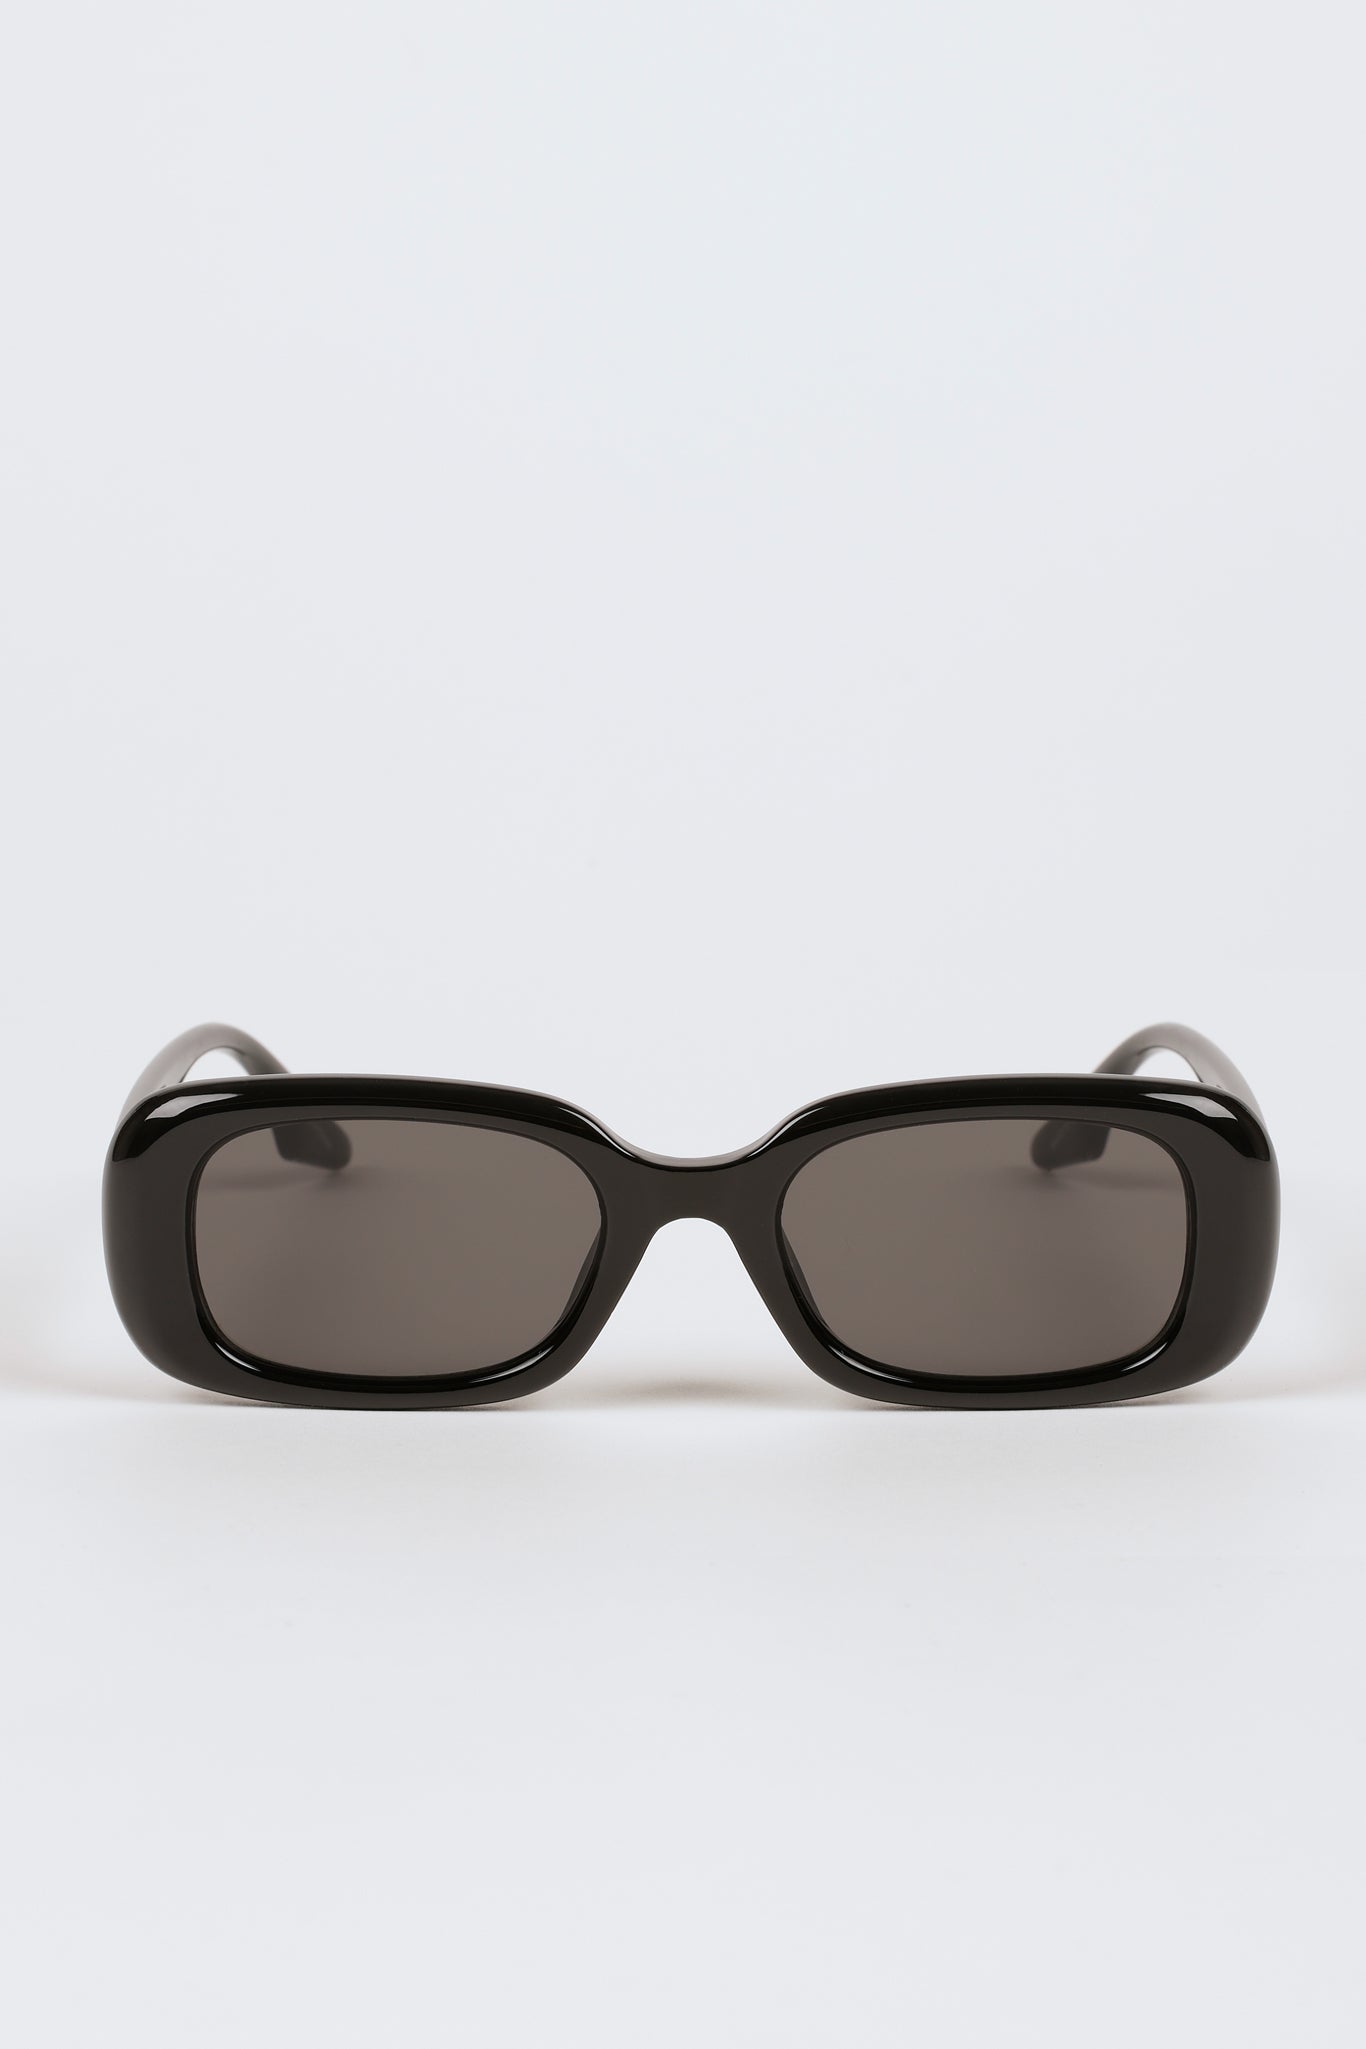 Black thick rectangular sunglasses